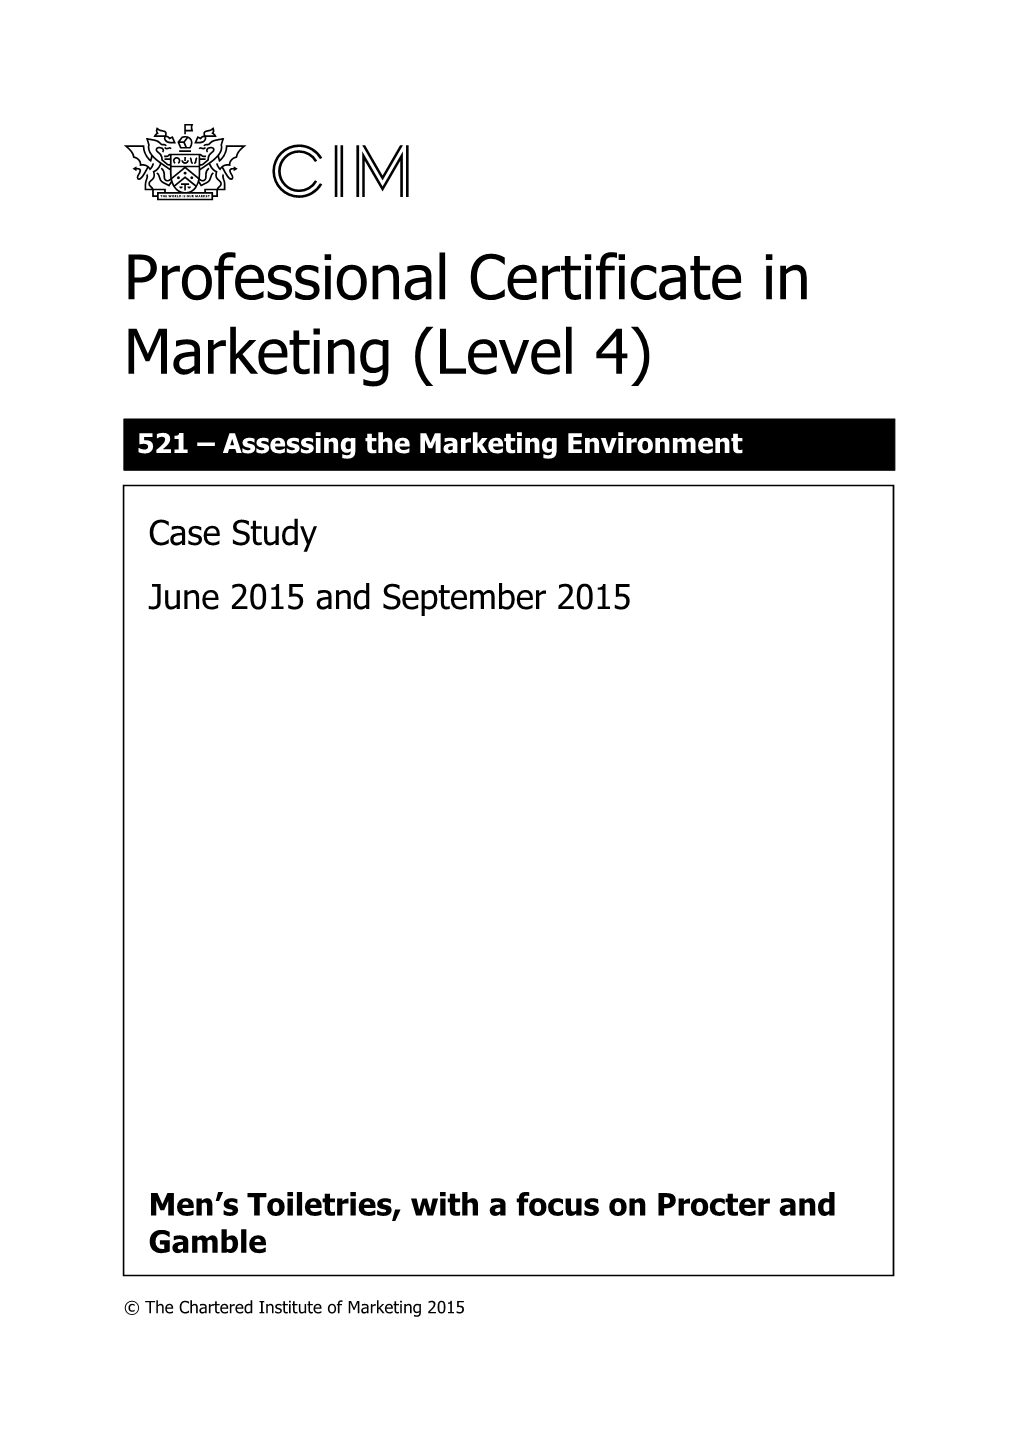 Professional Certificate in Marketing (Level 4)